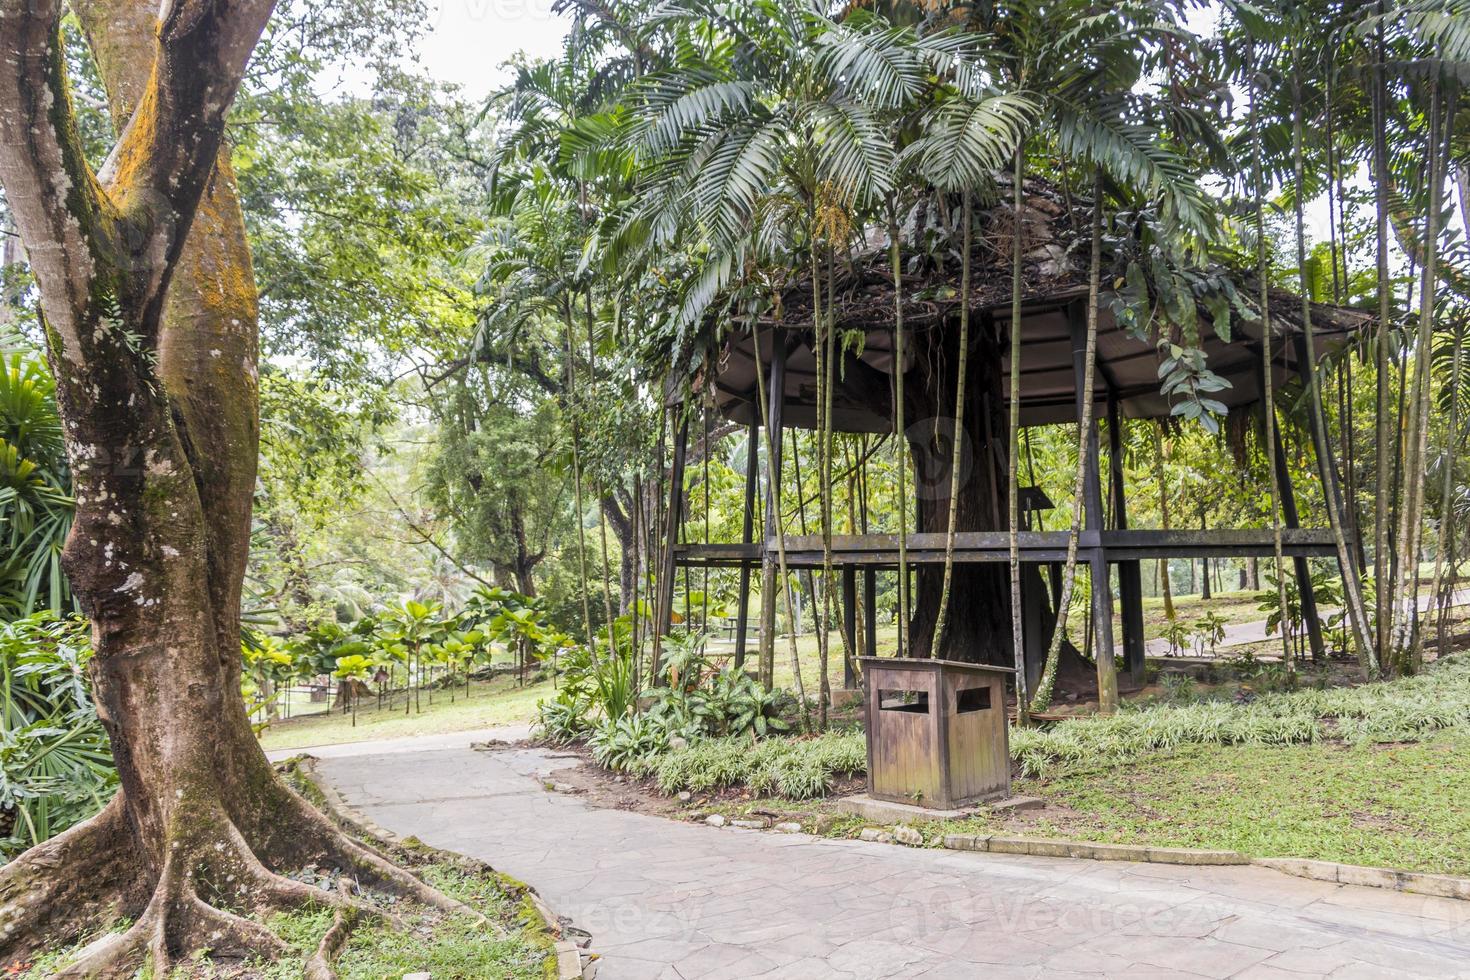 Oasis Garden in Perdana Botanical Gardens in Kuala Lumpur, Malaysia. photo